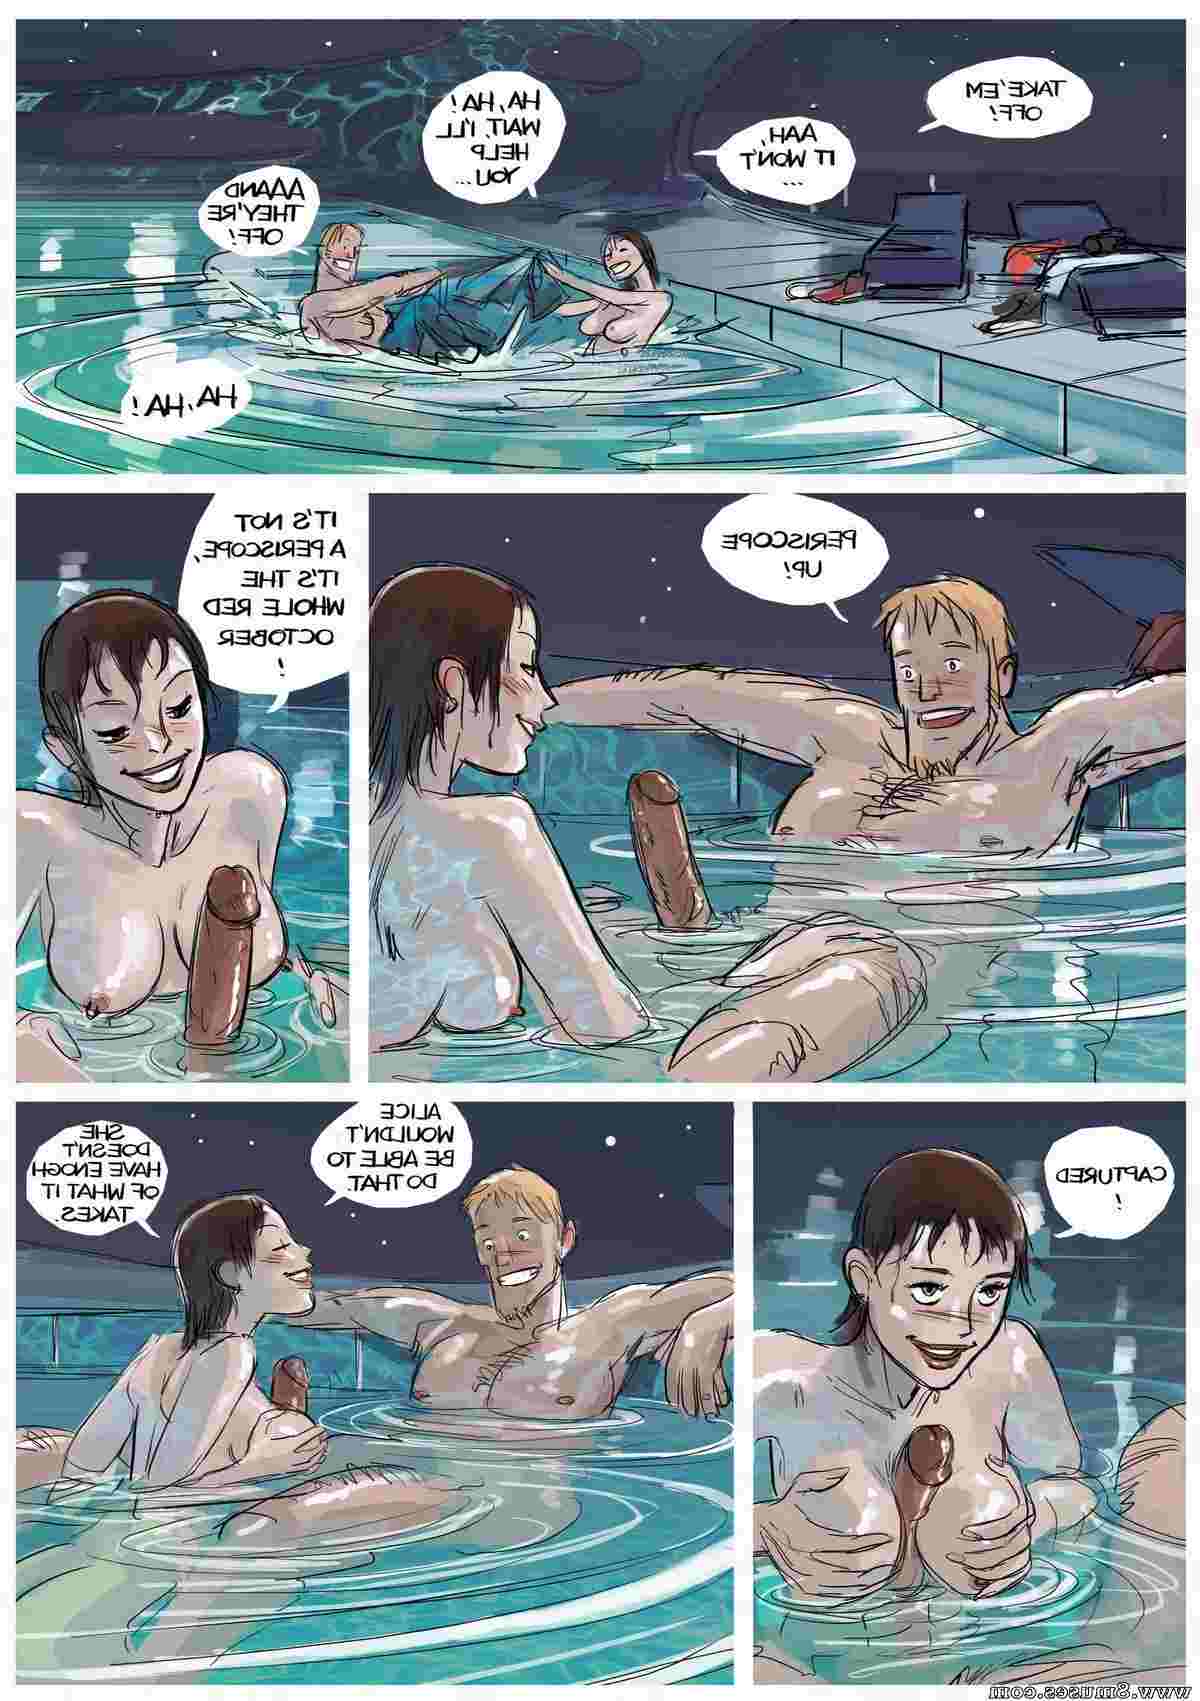 Slipshine-Comics/Lust-Boat Lust_Boat__8muses_-_Sex_and_Porn_Comics_67.jpg